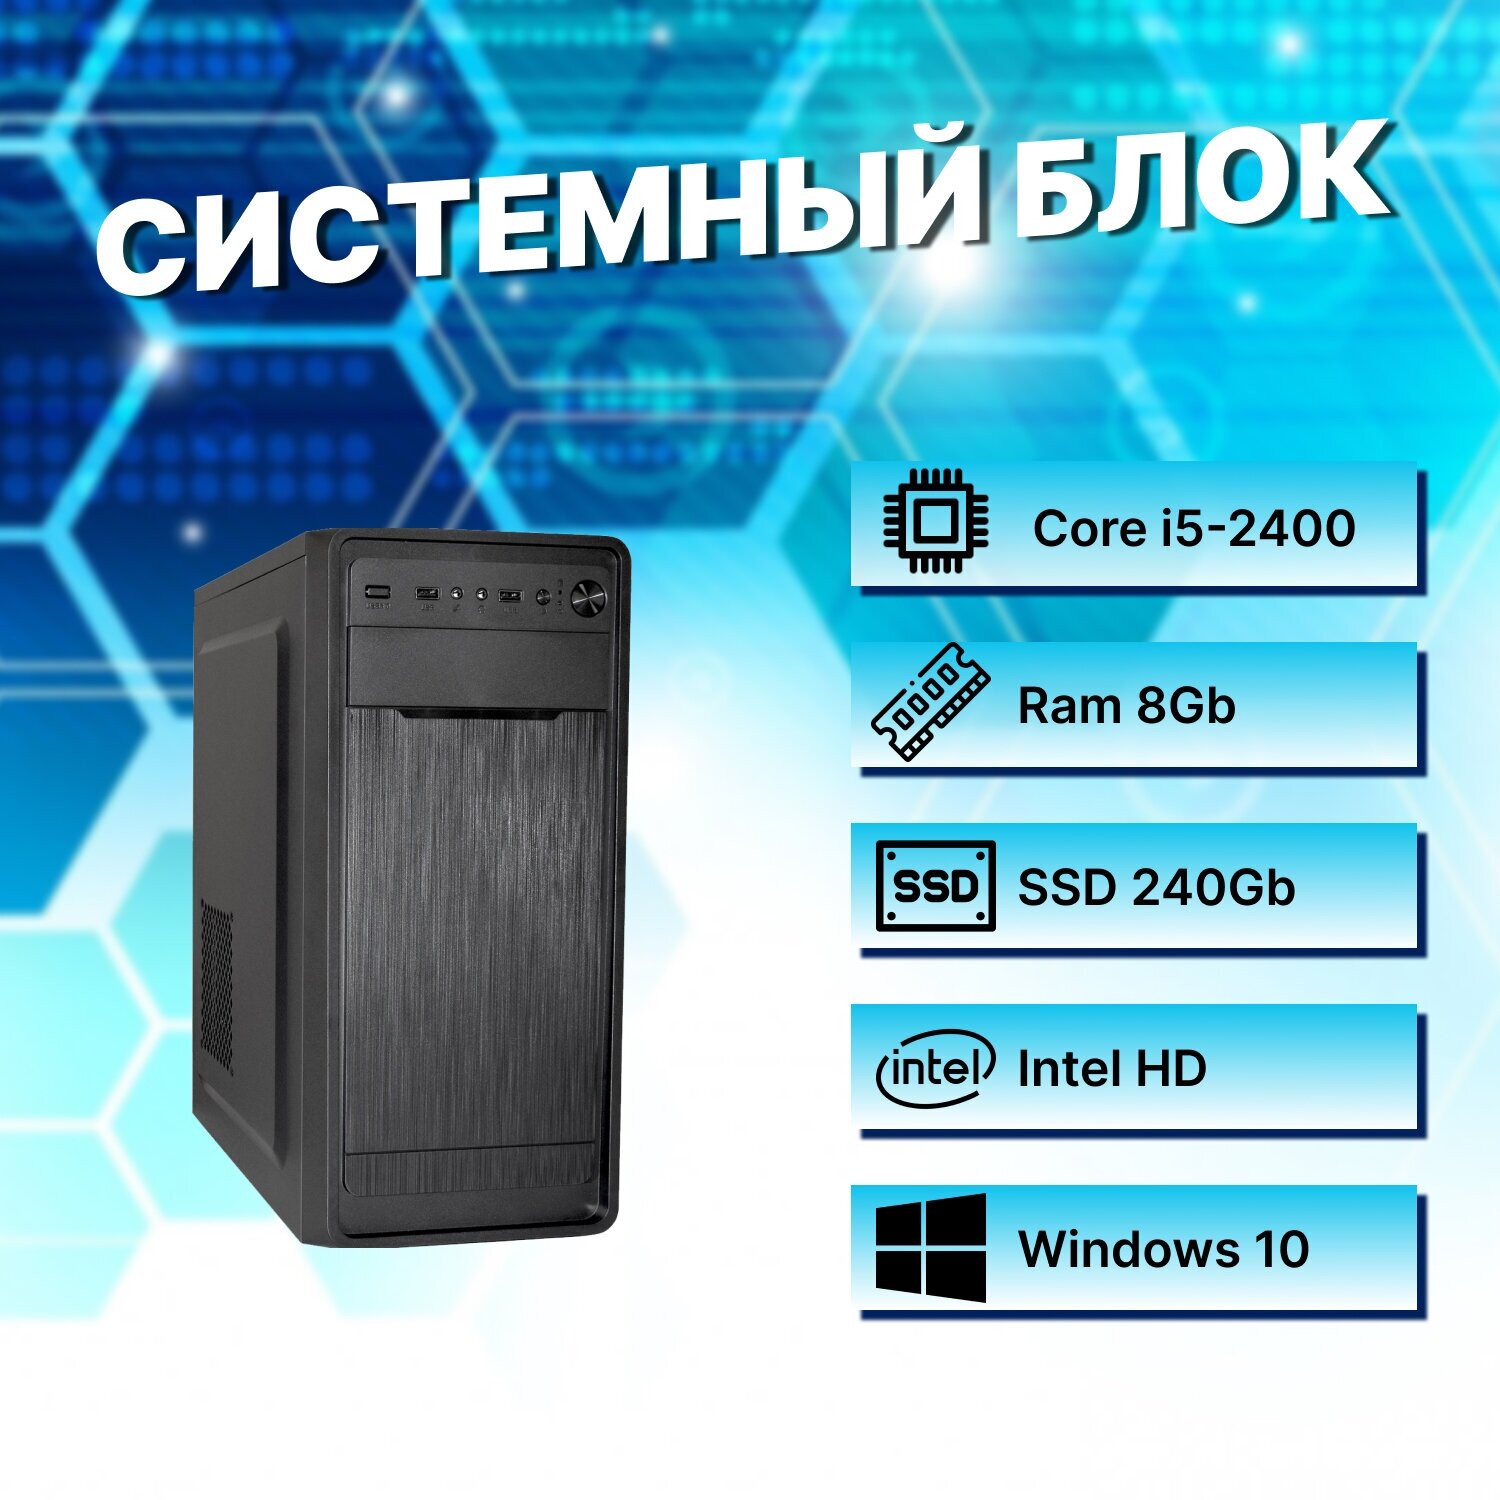 Системный блок Intel Core i5-2400 (3.1ГГц)/ RAM 8Gb/ SSD 240Gb/ Intel HD Graphics 2000/ Windows 10 Pro